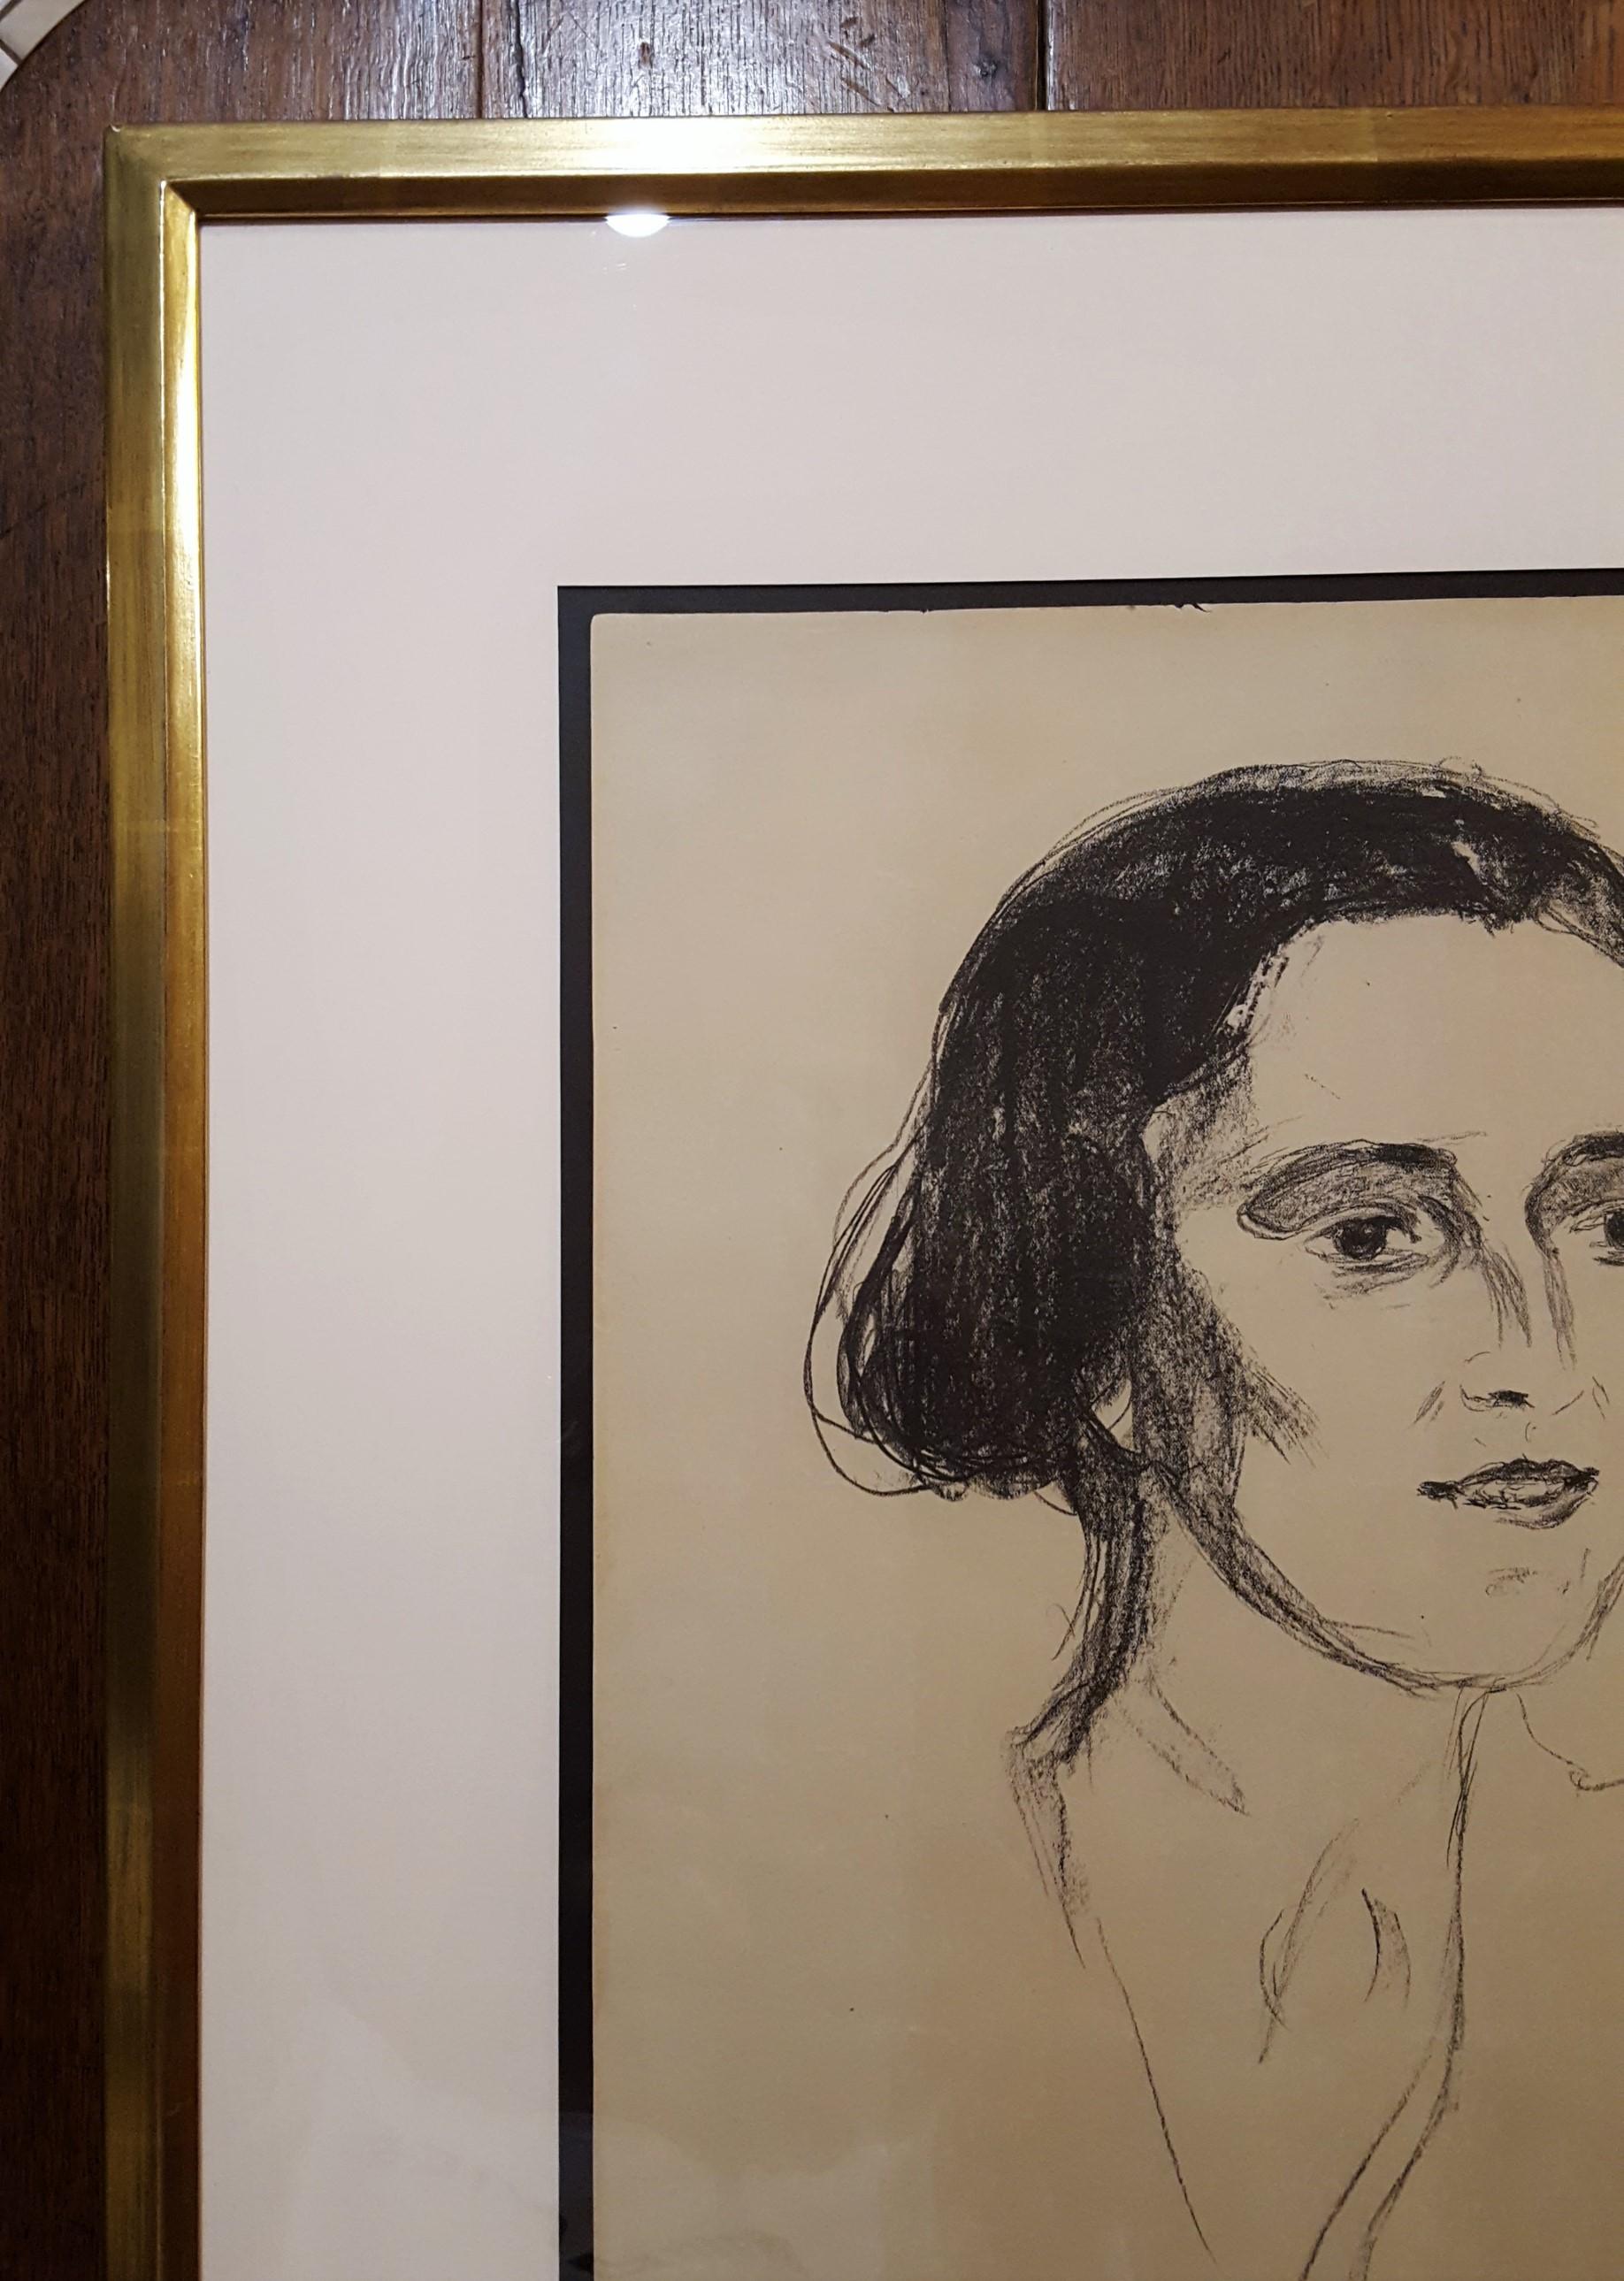 Artist: Edvard Munch (Norwegian, 1863-1944)
Title: 